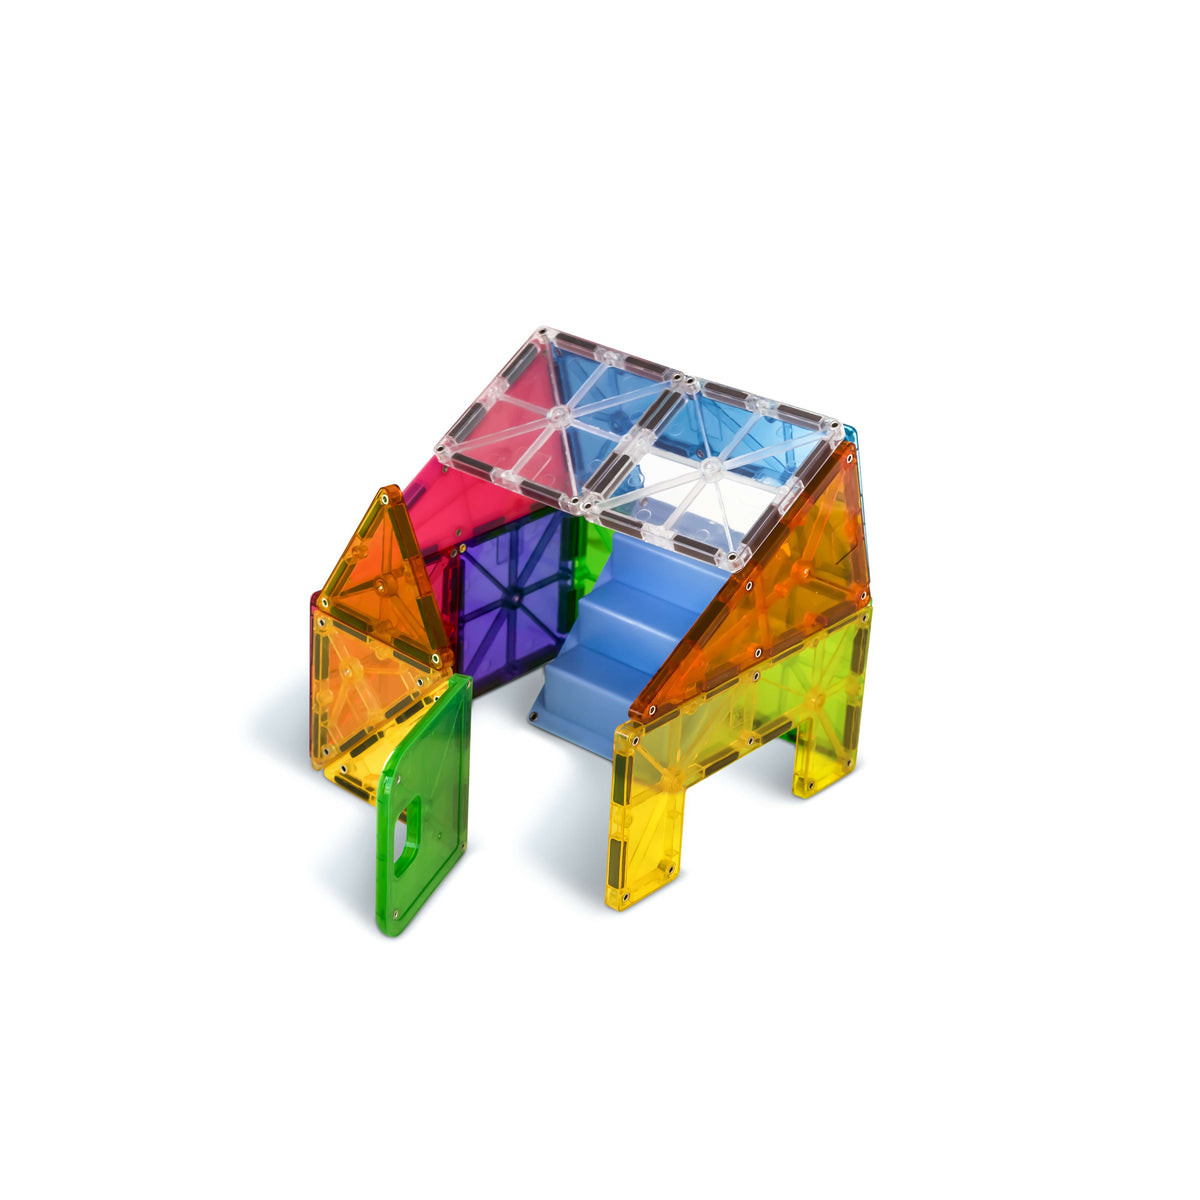 magna-tiles-tiles-house-28-piece-set- (3)